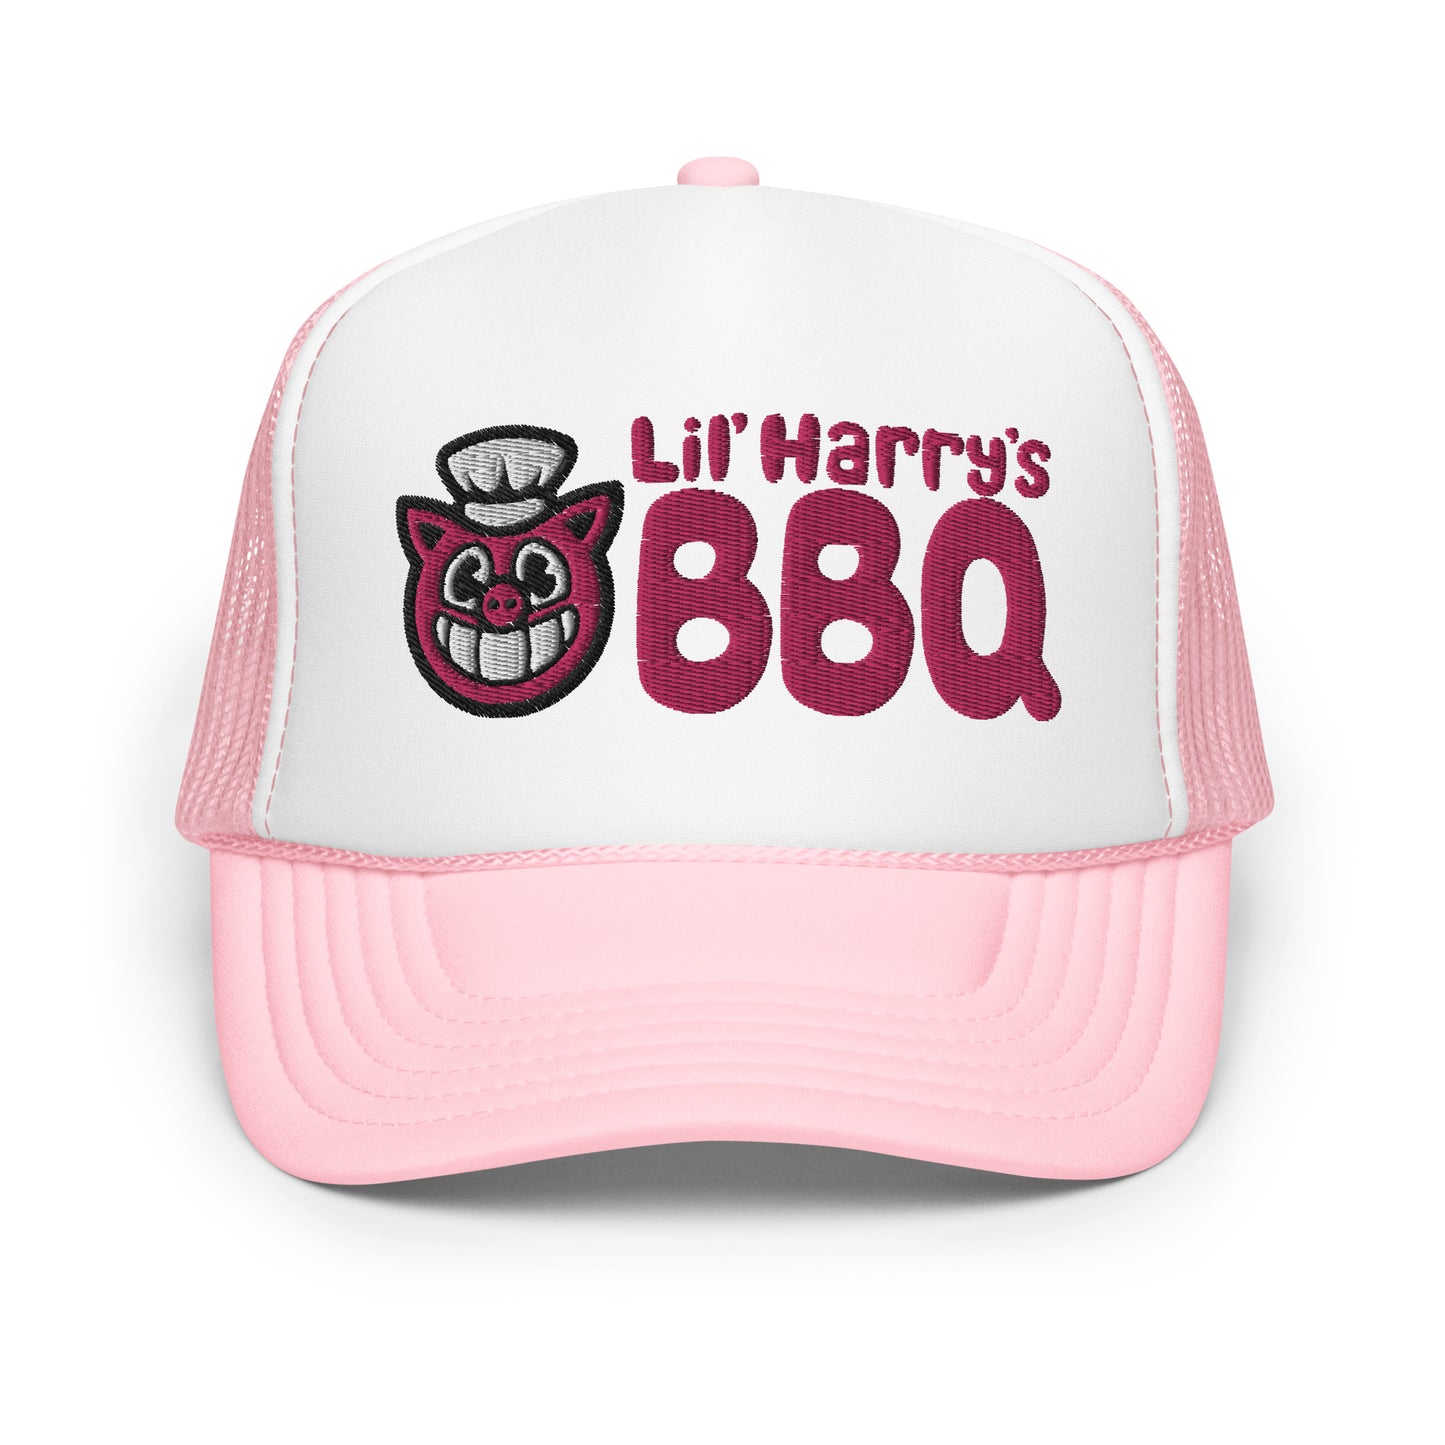 Lil' Harry's BBQ Foam Trucker Hat